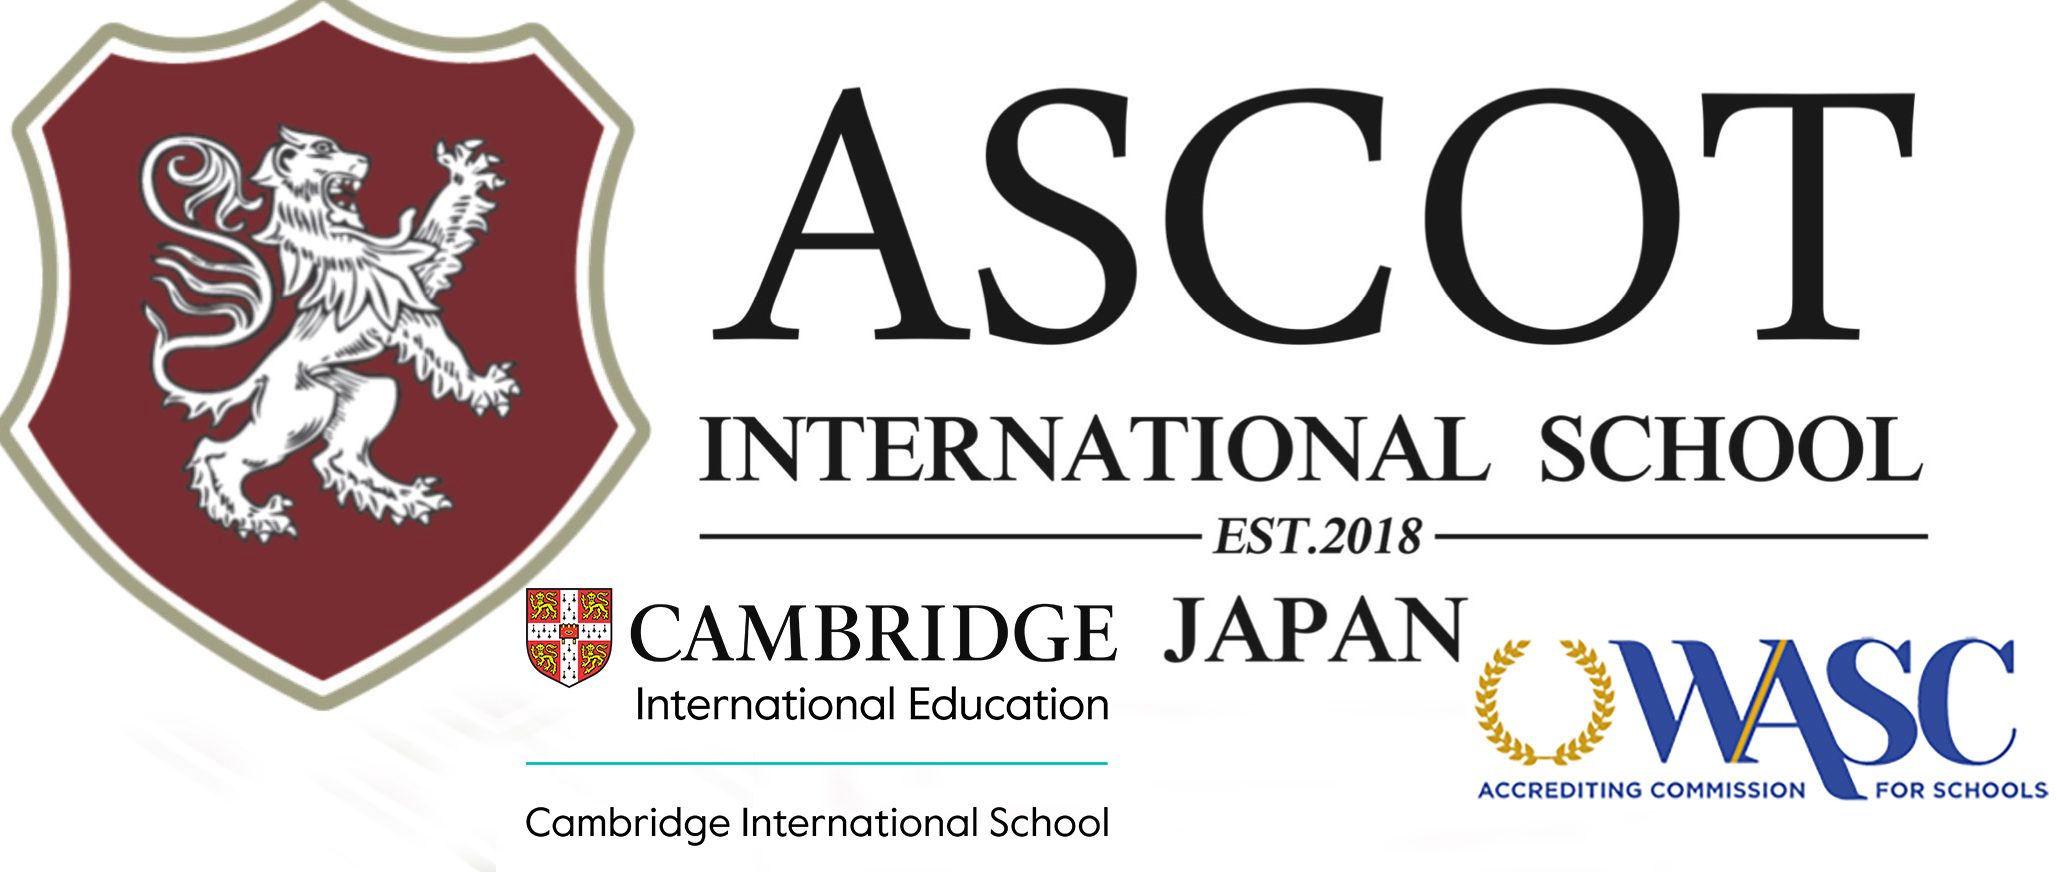 Ascot International School Japan